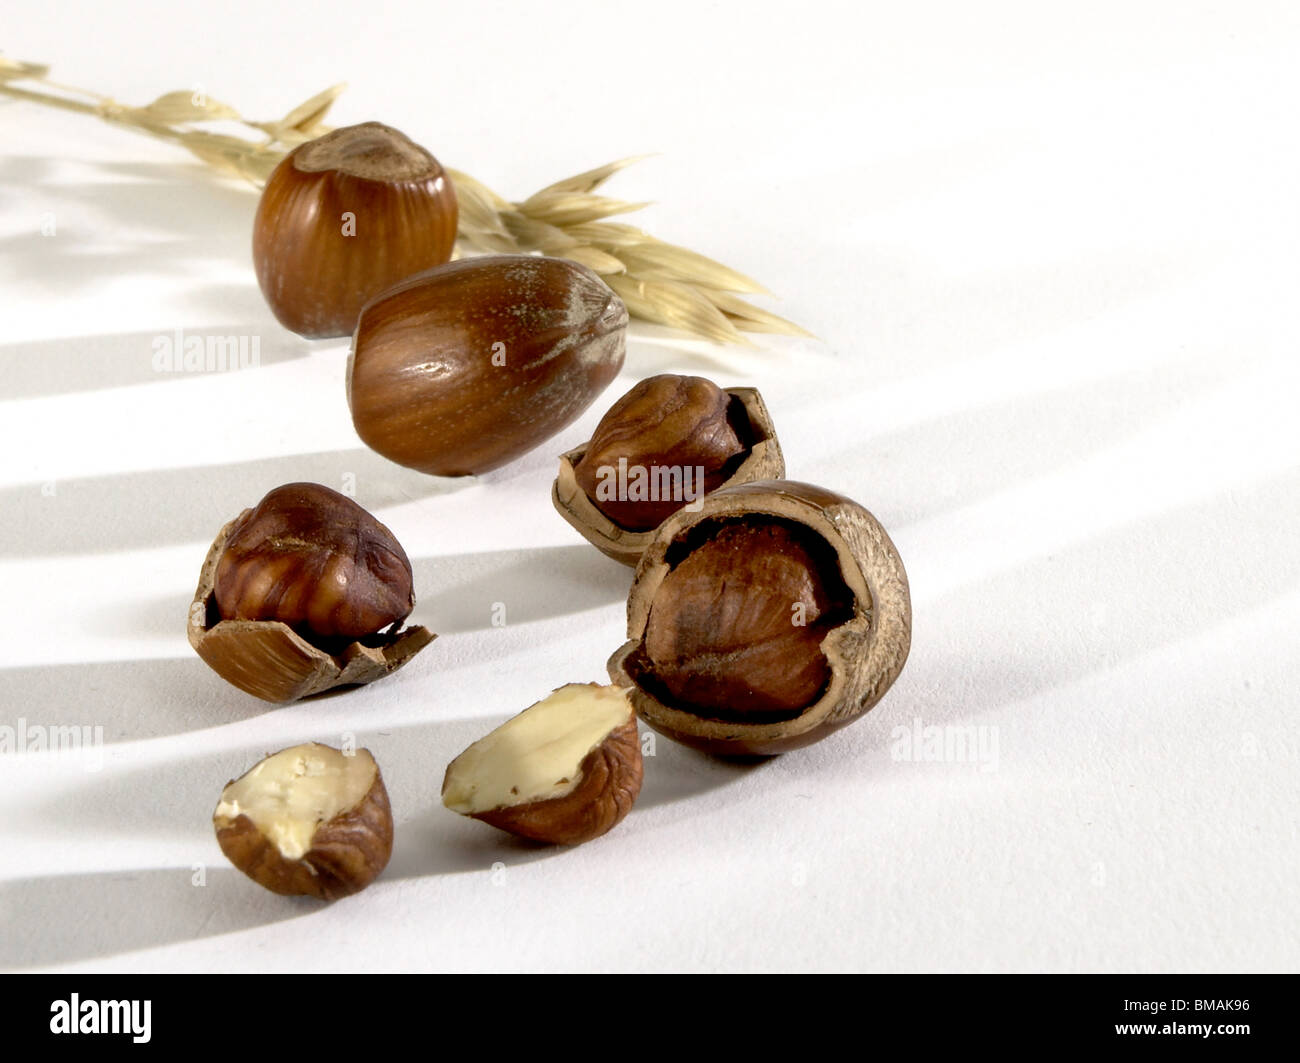 Hazelnuts and oats Stock Photo